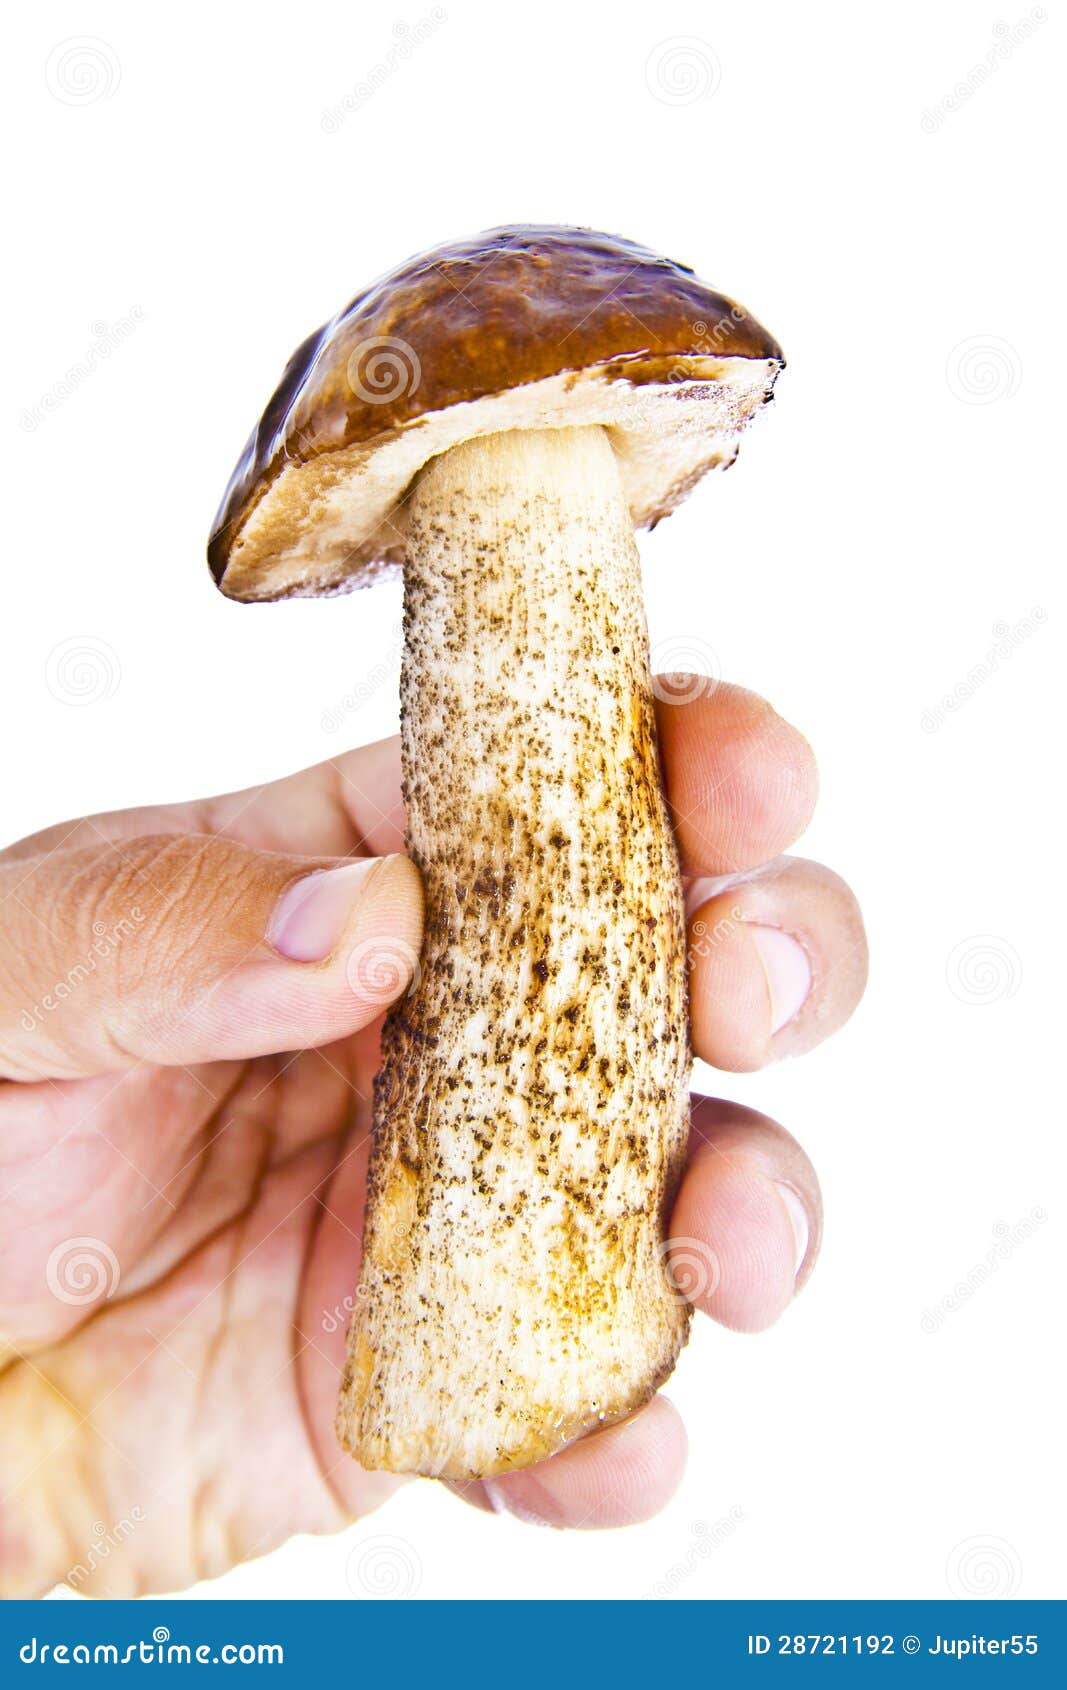 mens fingers holds a big ceps mushroom  on white